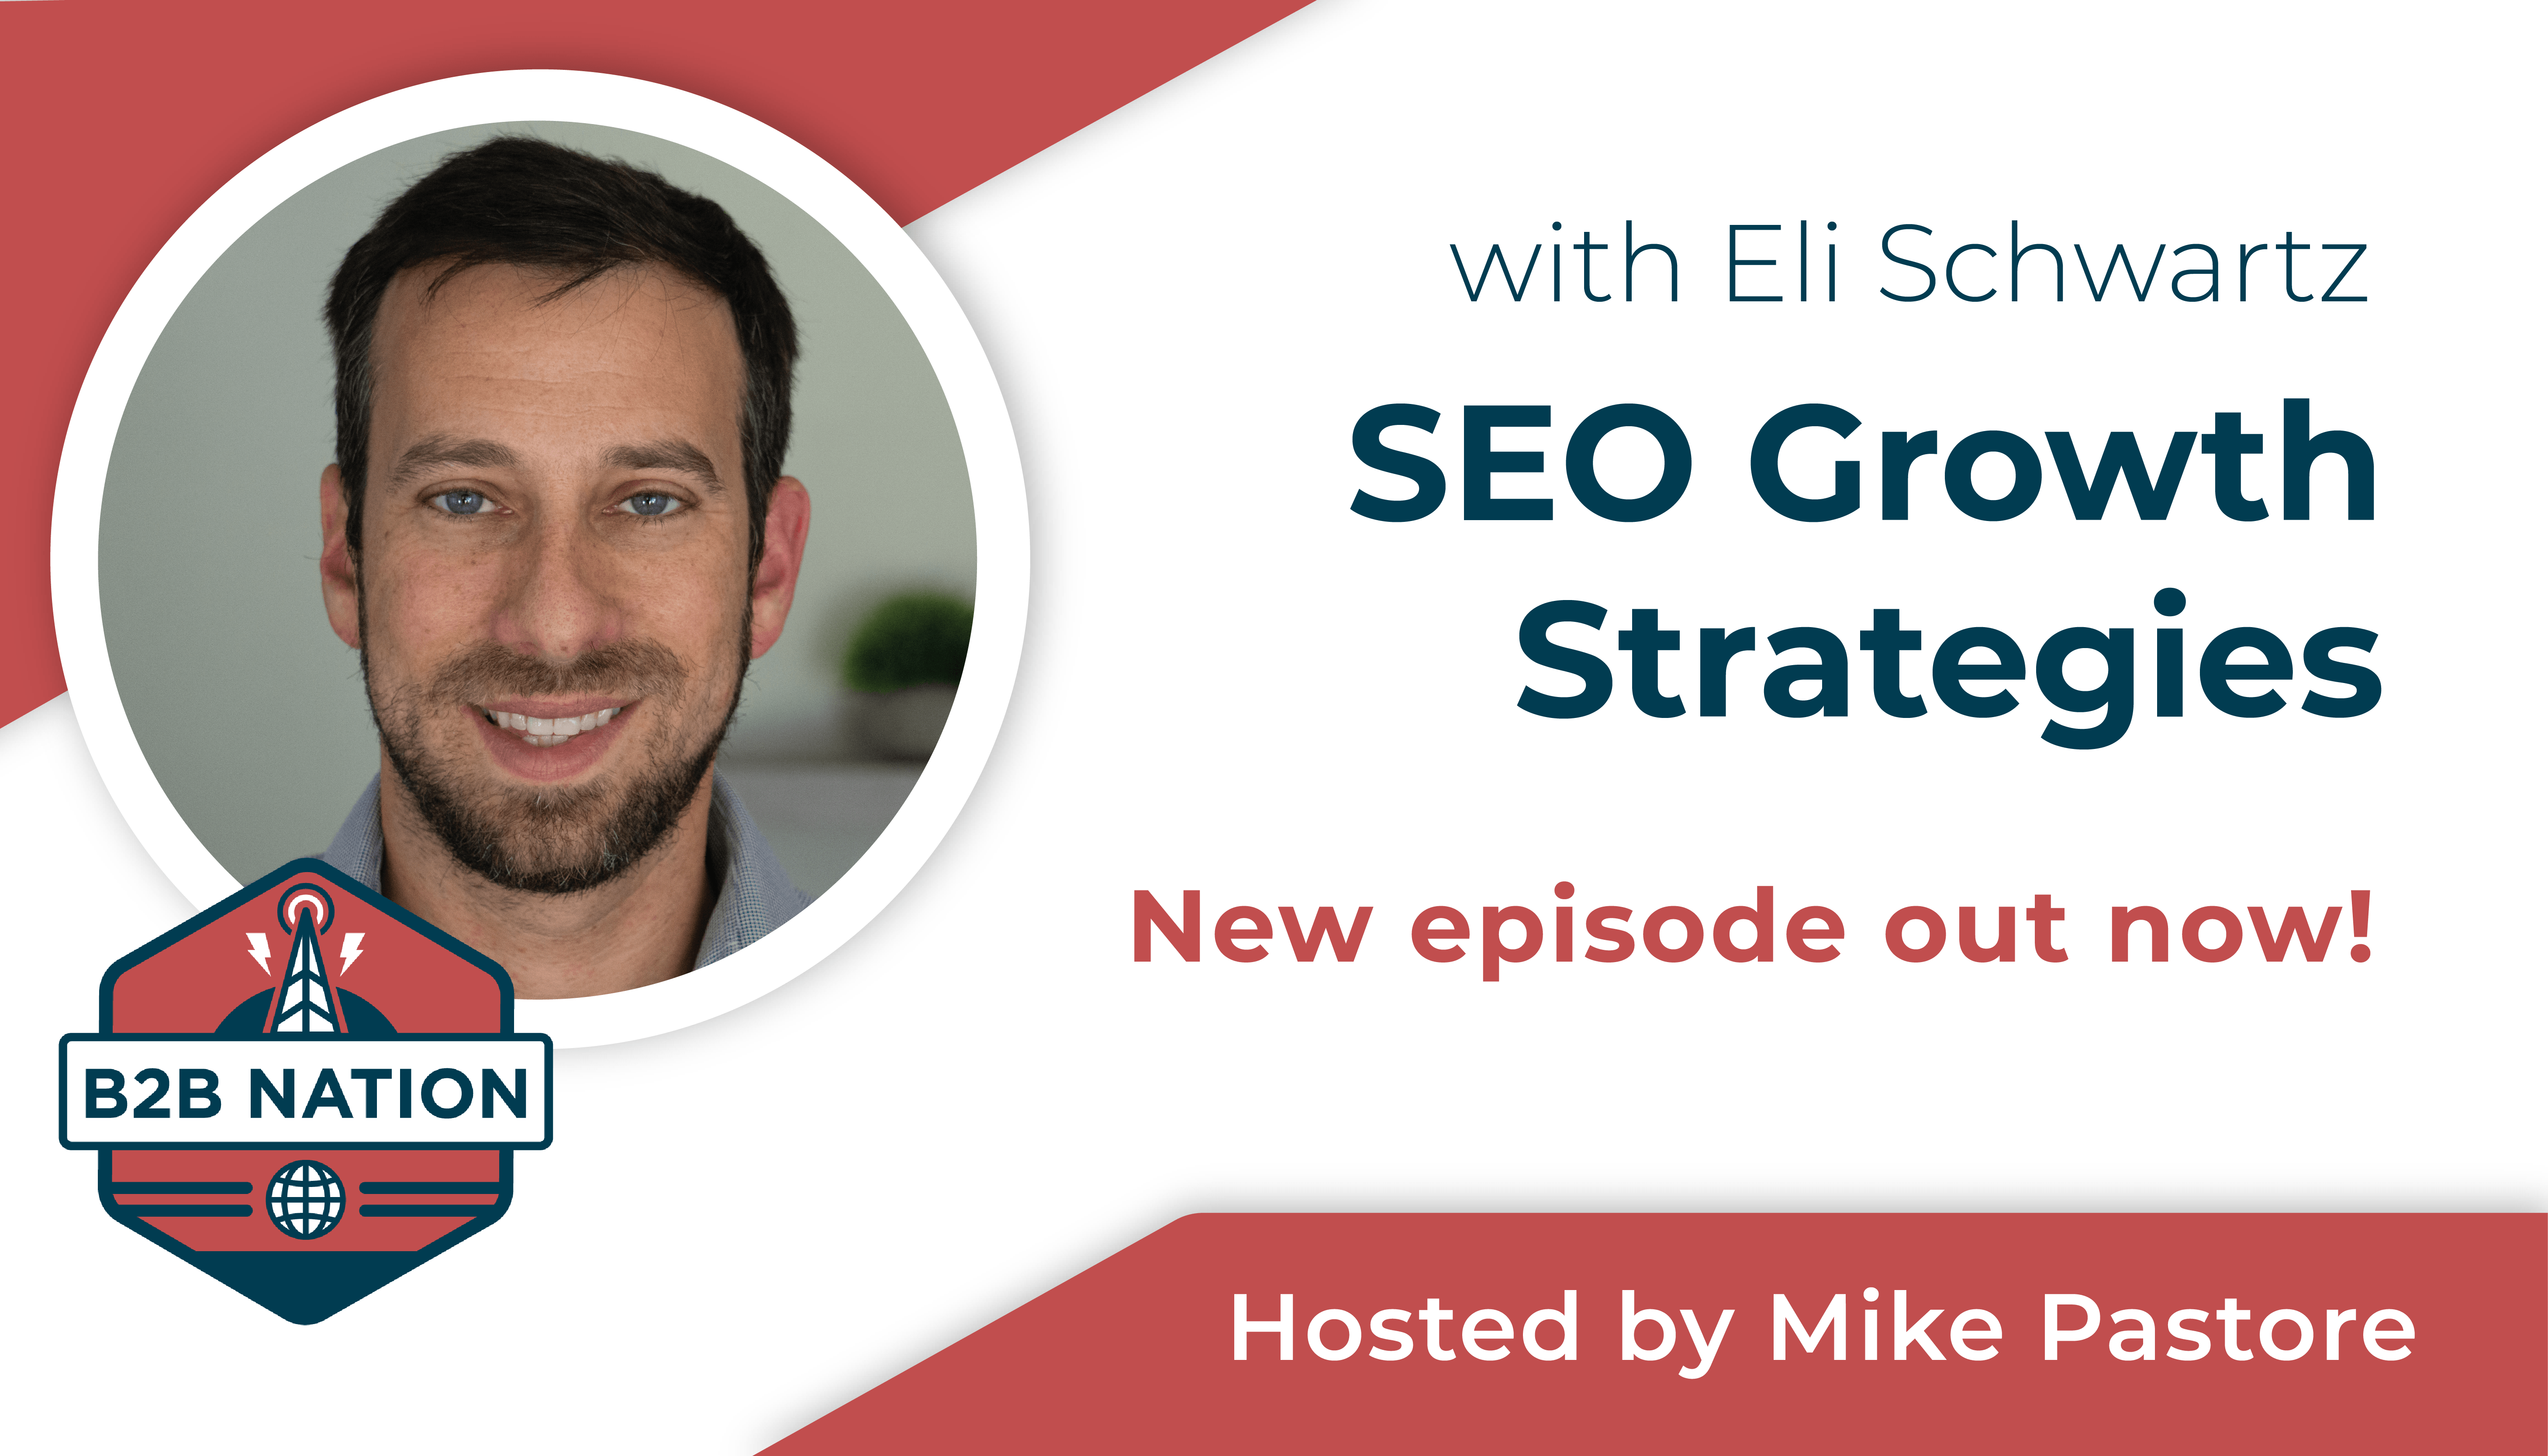 SEO growth strategies with Eli Schwartz.